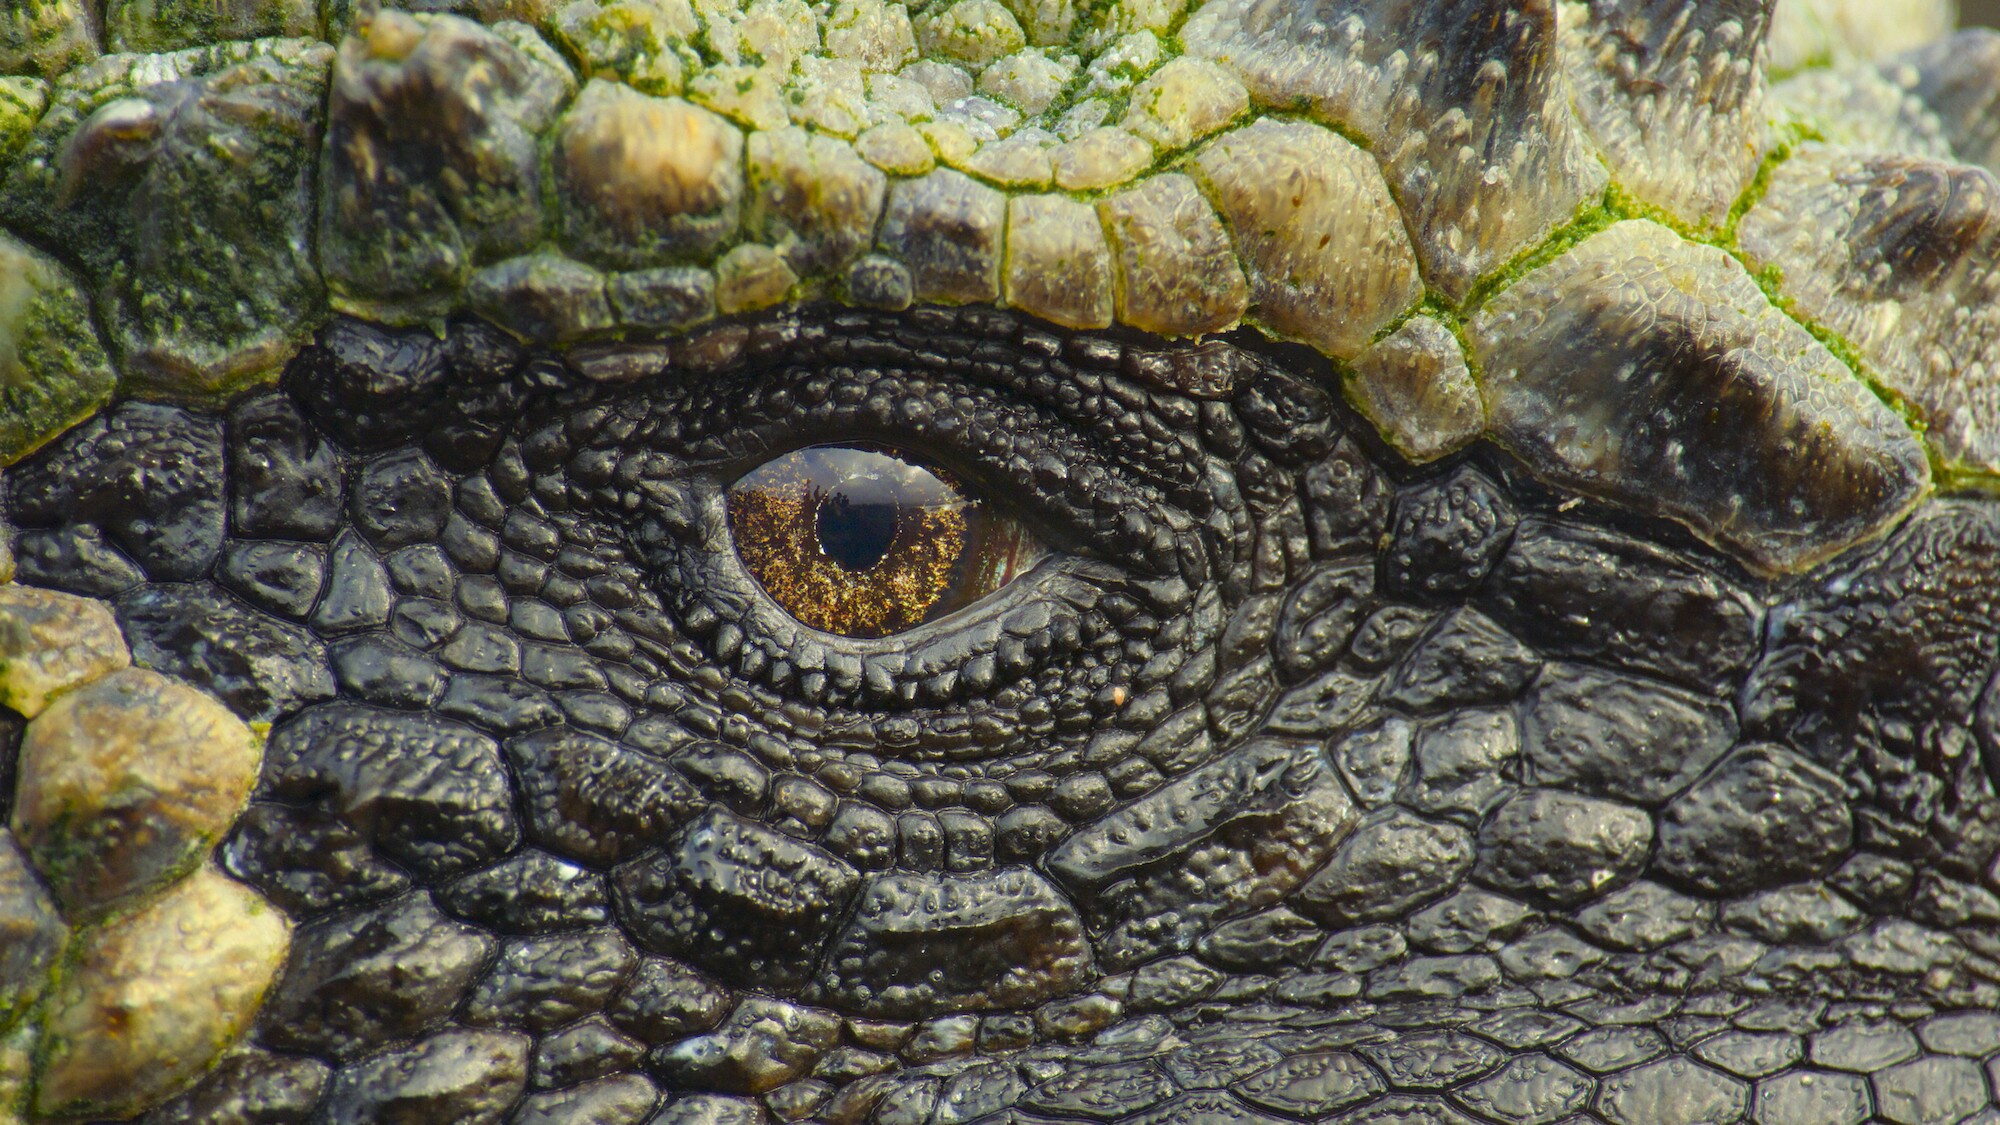 Close up of marine iguana eye. (National Geographic for Disney+/Bertie Gregory)